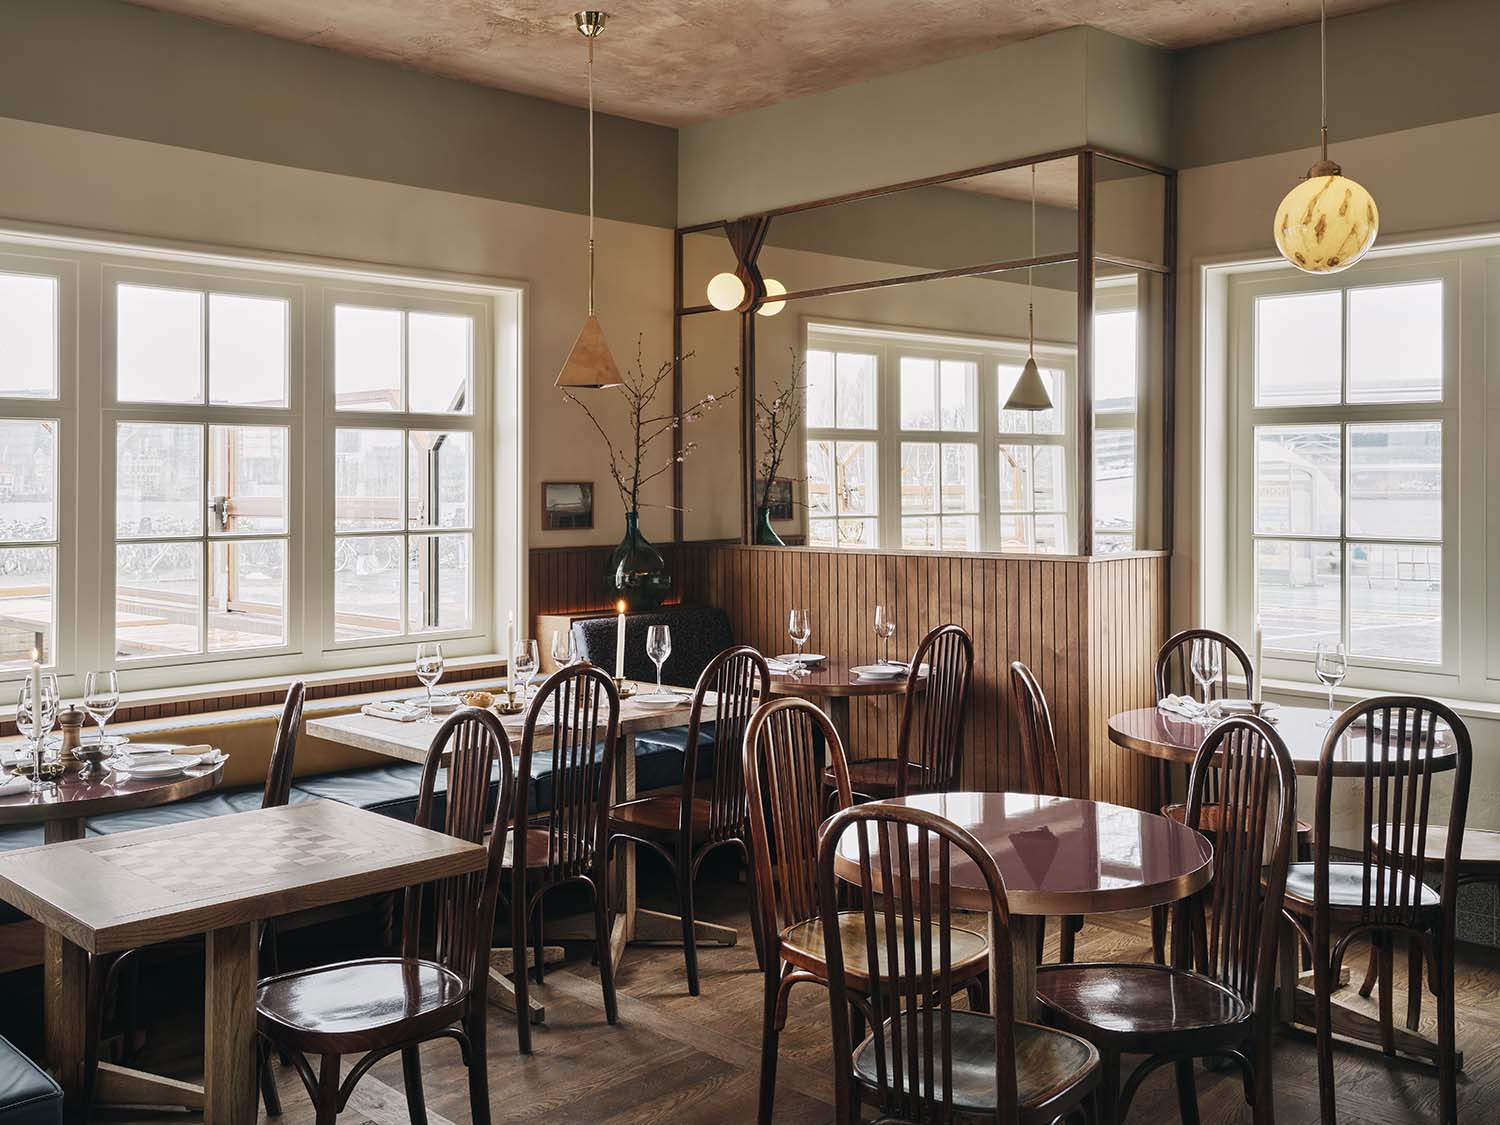 Polly Goudvisch North Amsterdam Brown Café by Studio Modijefsky